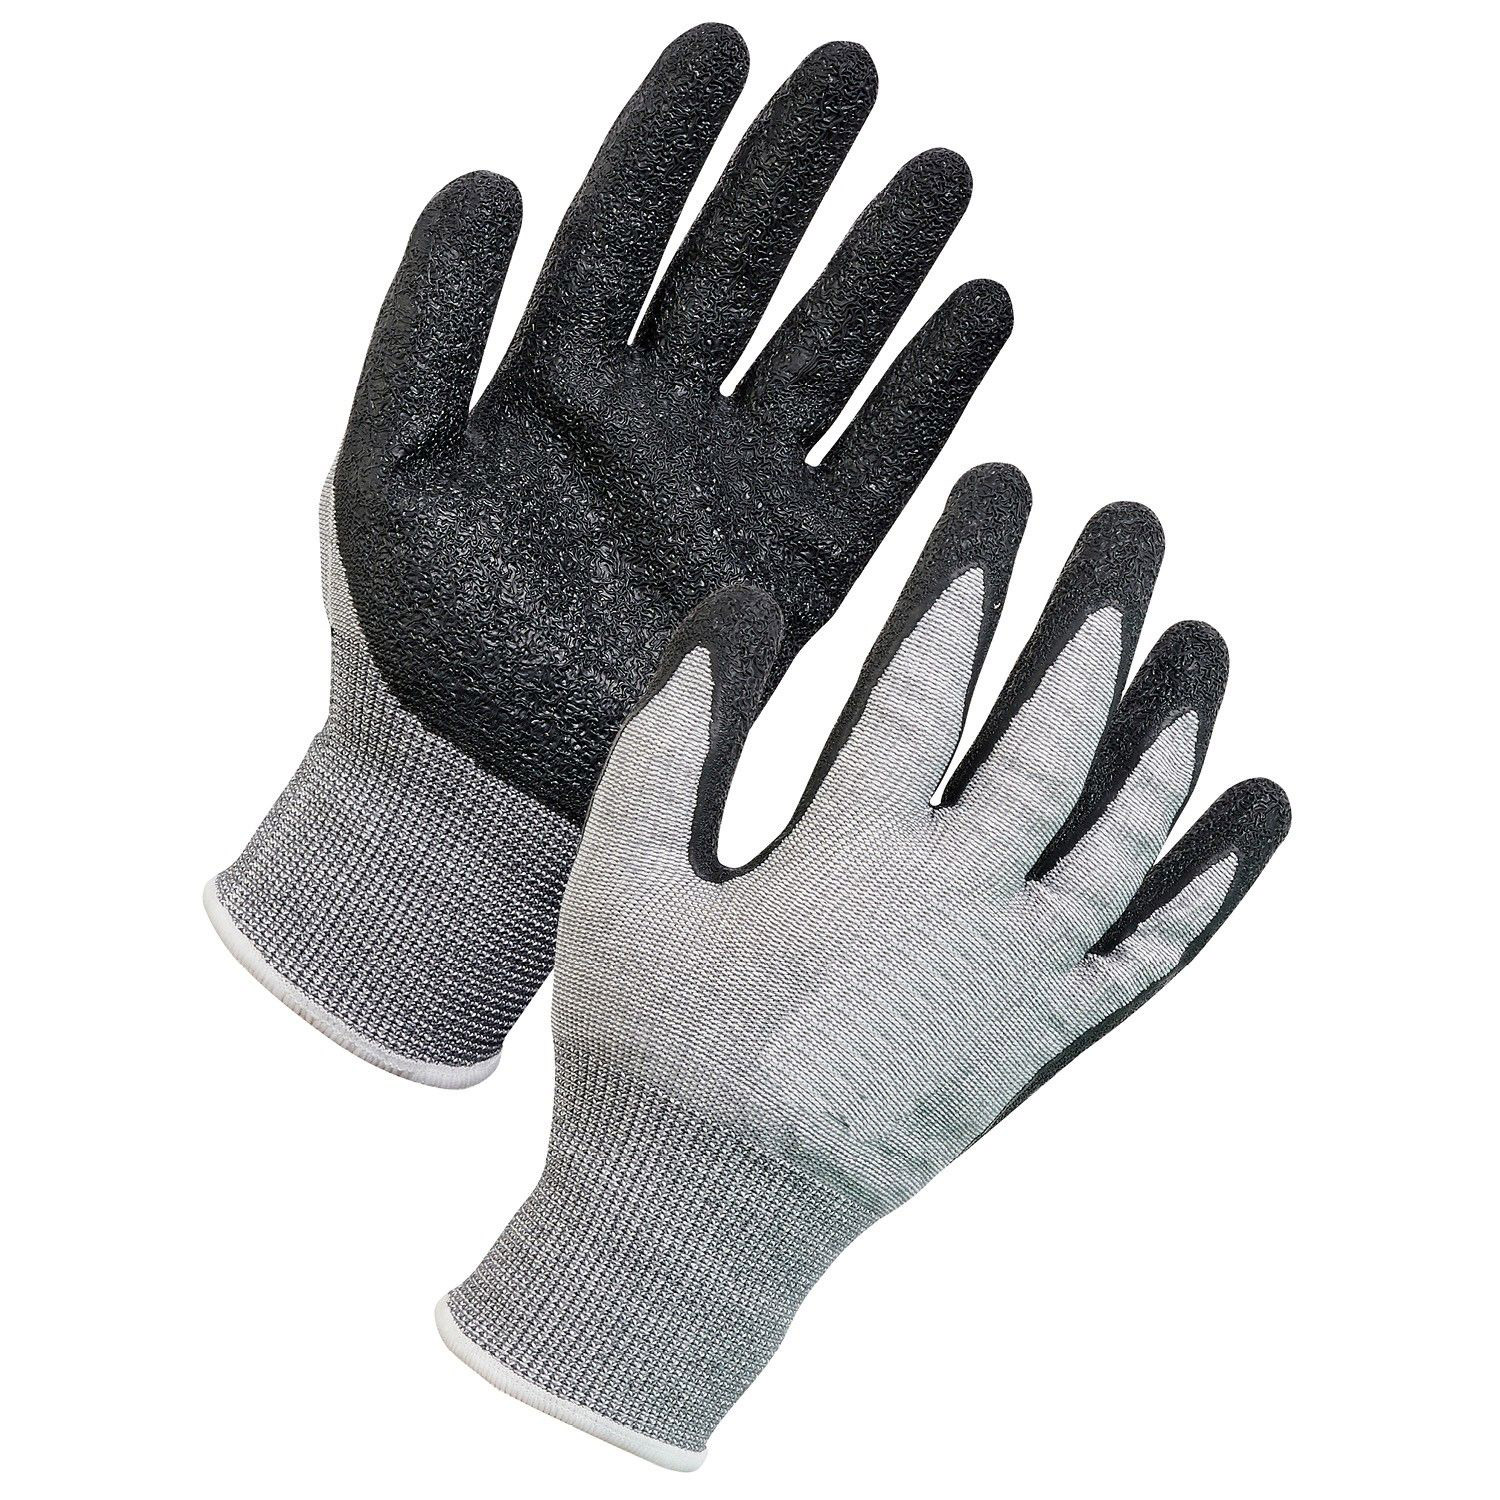 Deflector LE Cut Resistant Gloves